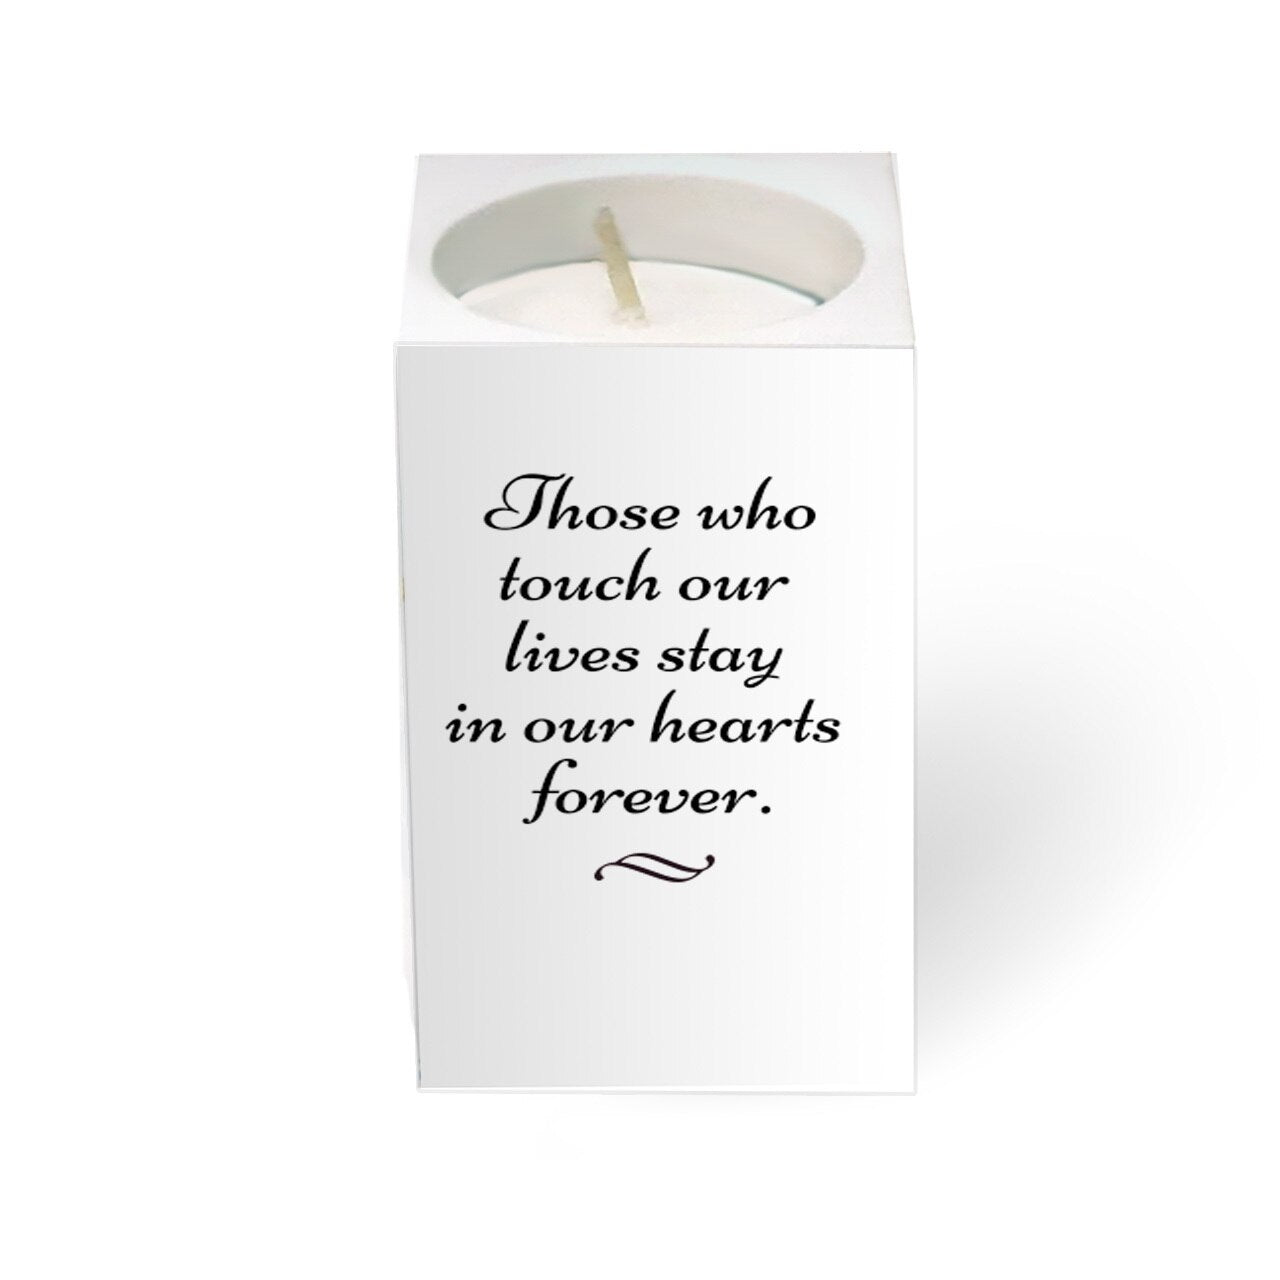 Photo Vignette Mini Memorial Tea Light Candle Holder - Celebrate Prints